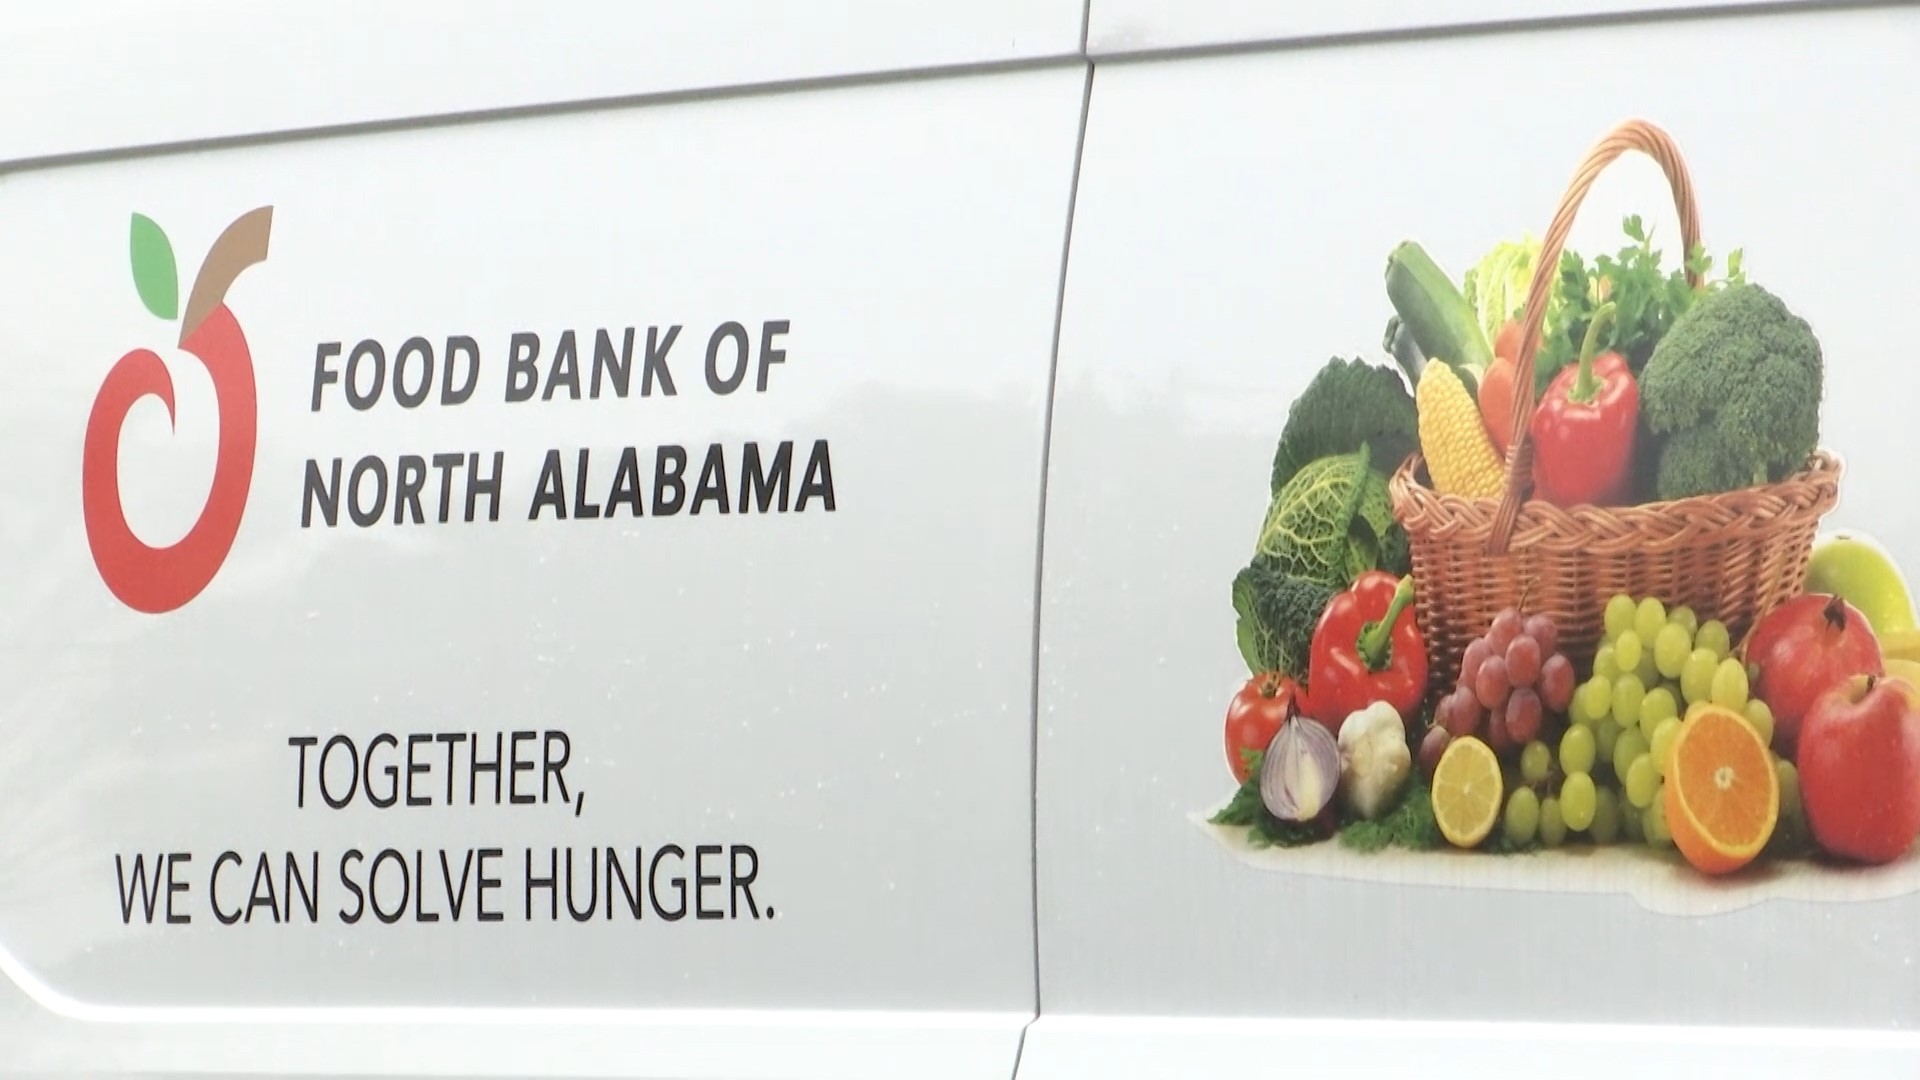 Food Bank of North Alabama